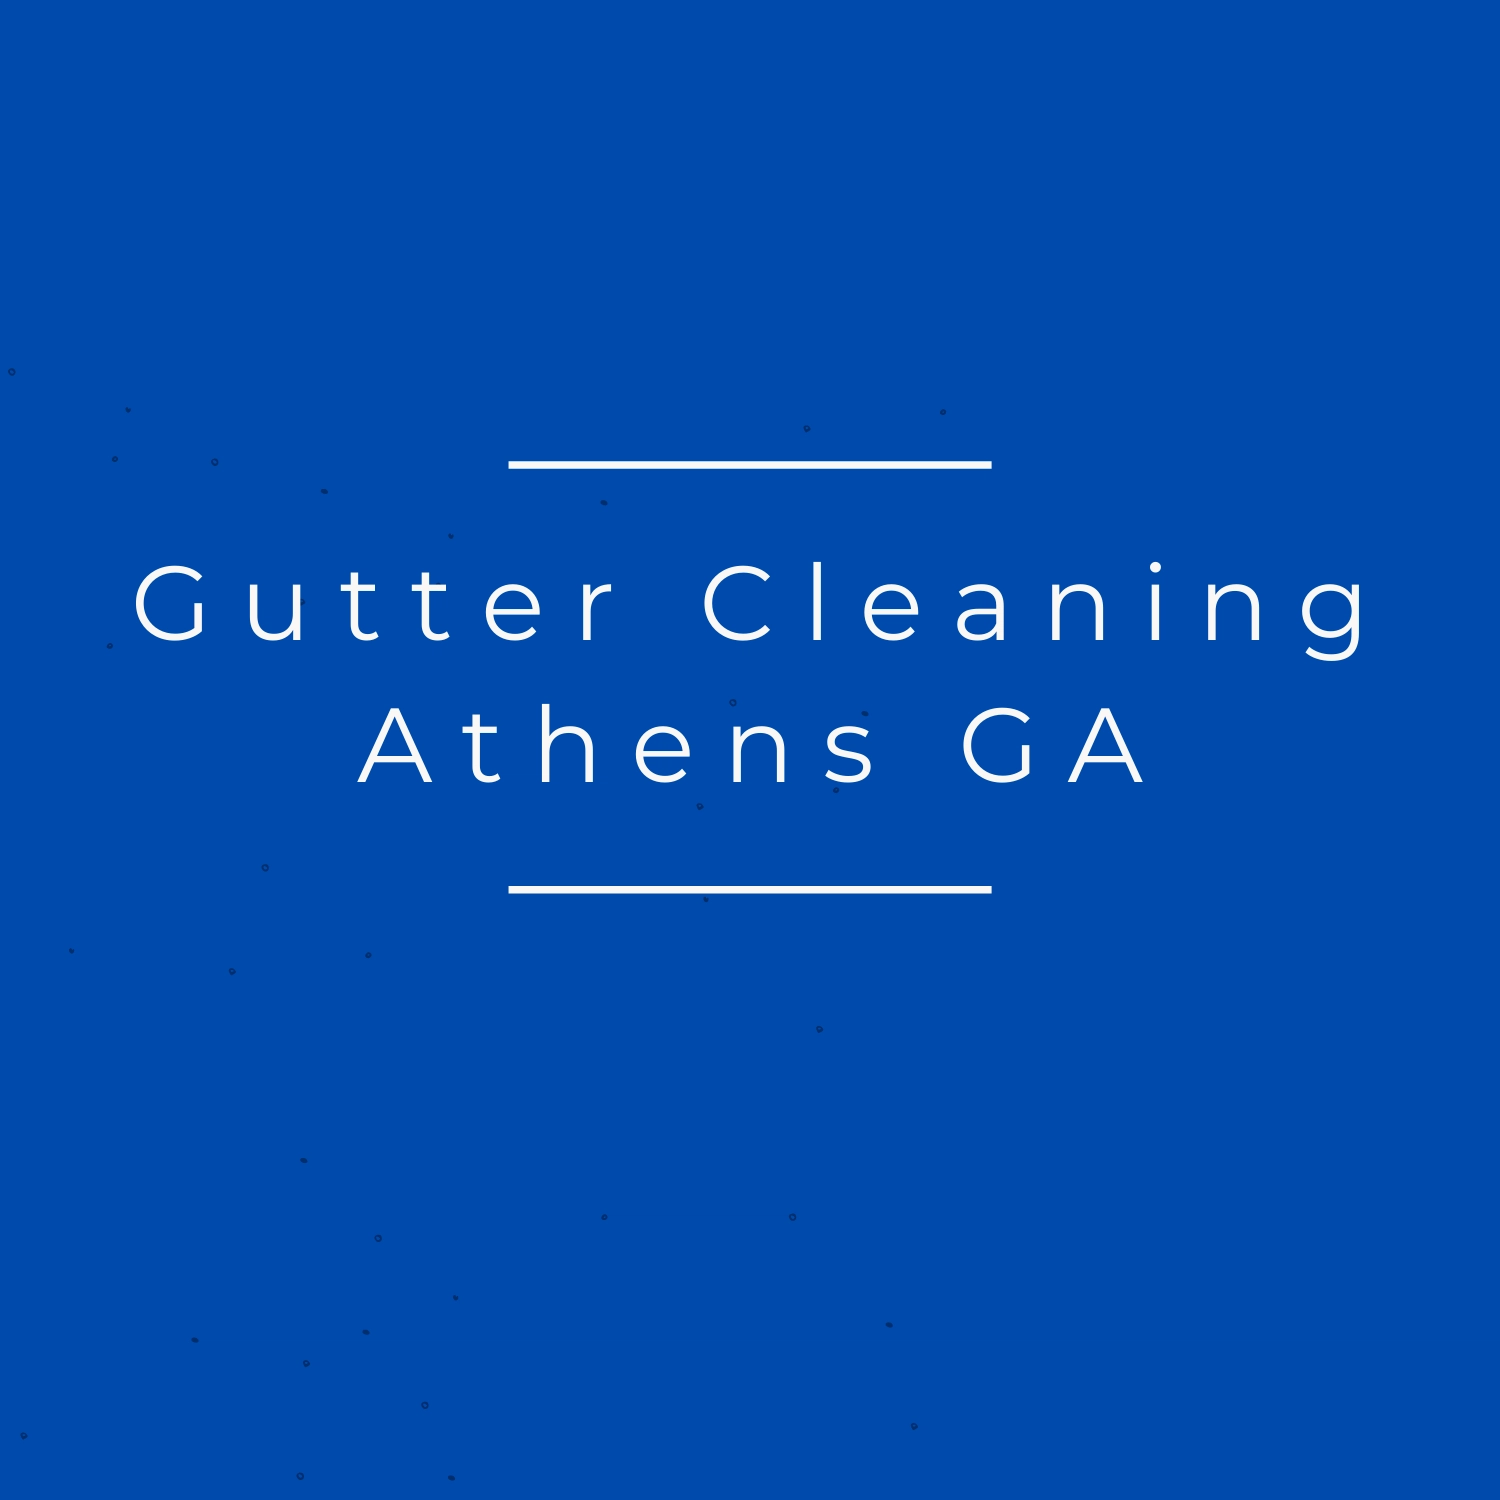 Gutter Cleaning of Athens GA Logo